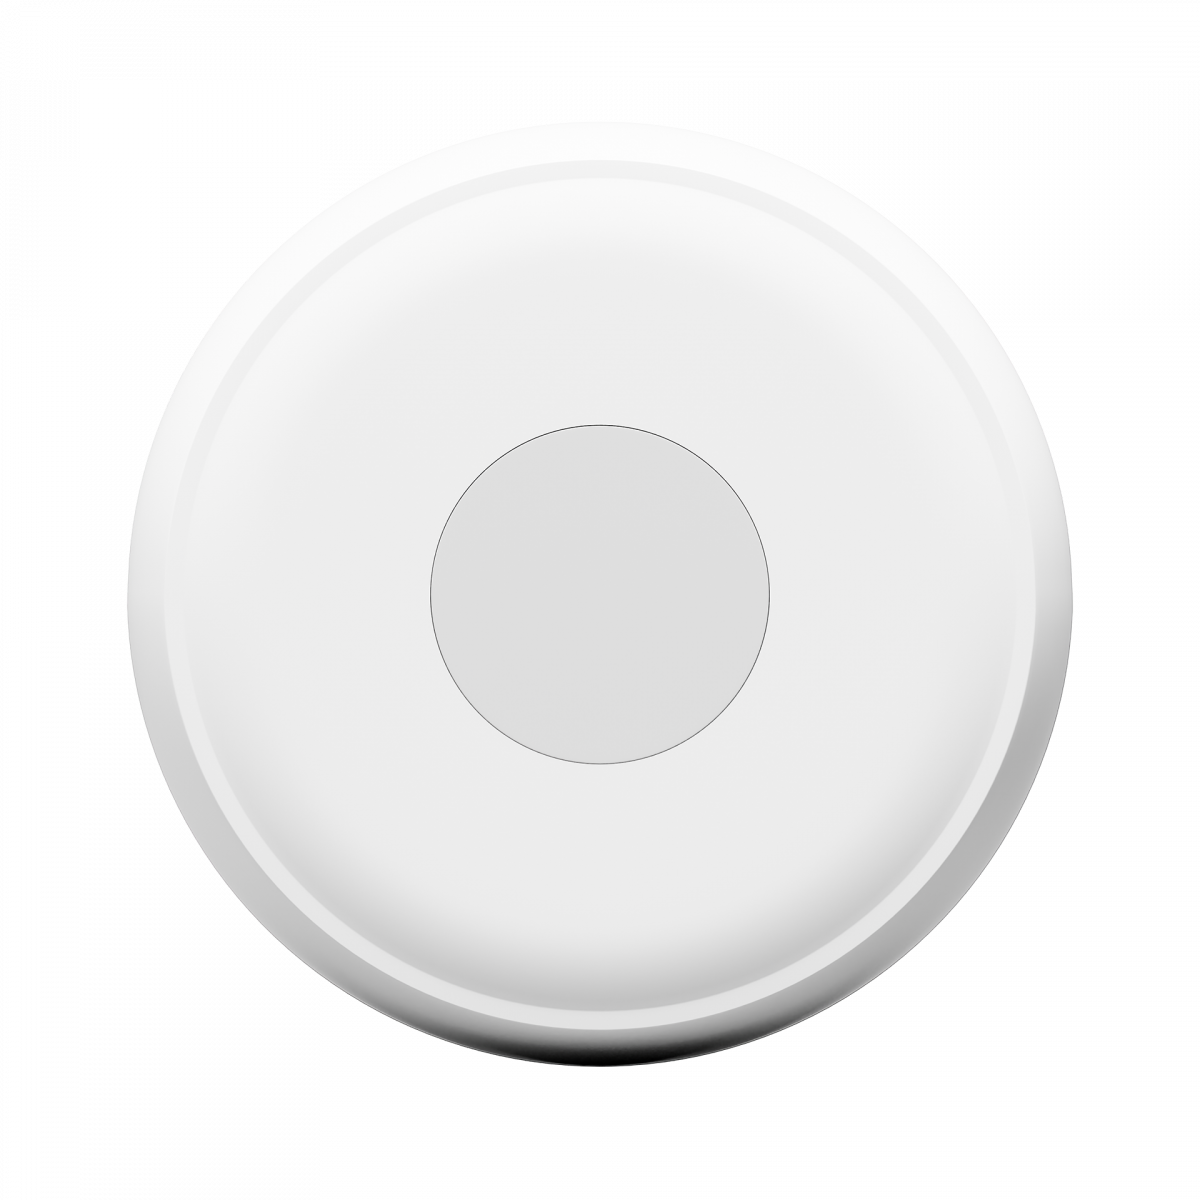 TS-Sensor-Button-1920x1920-01